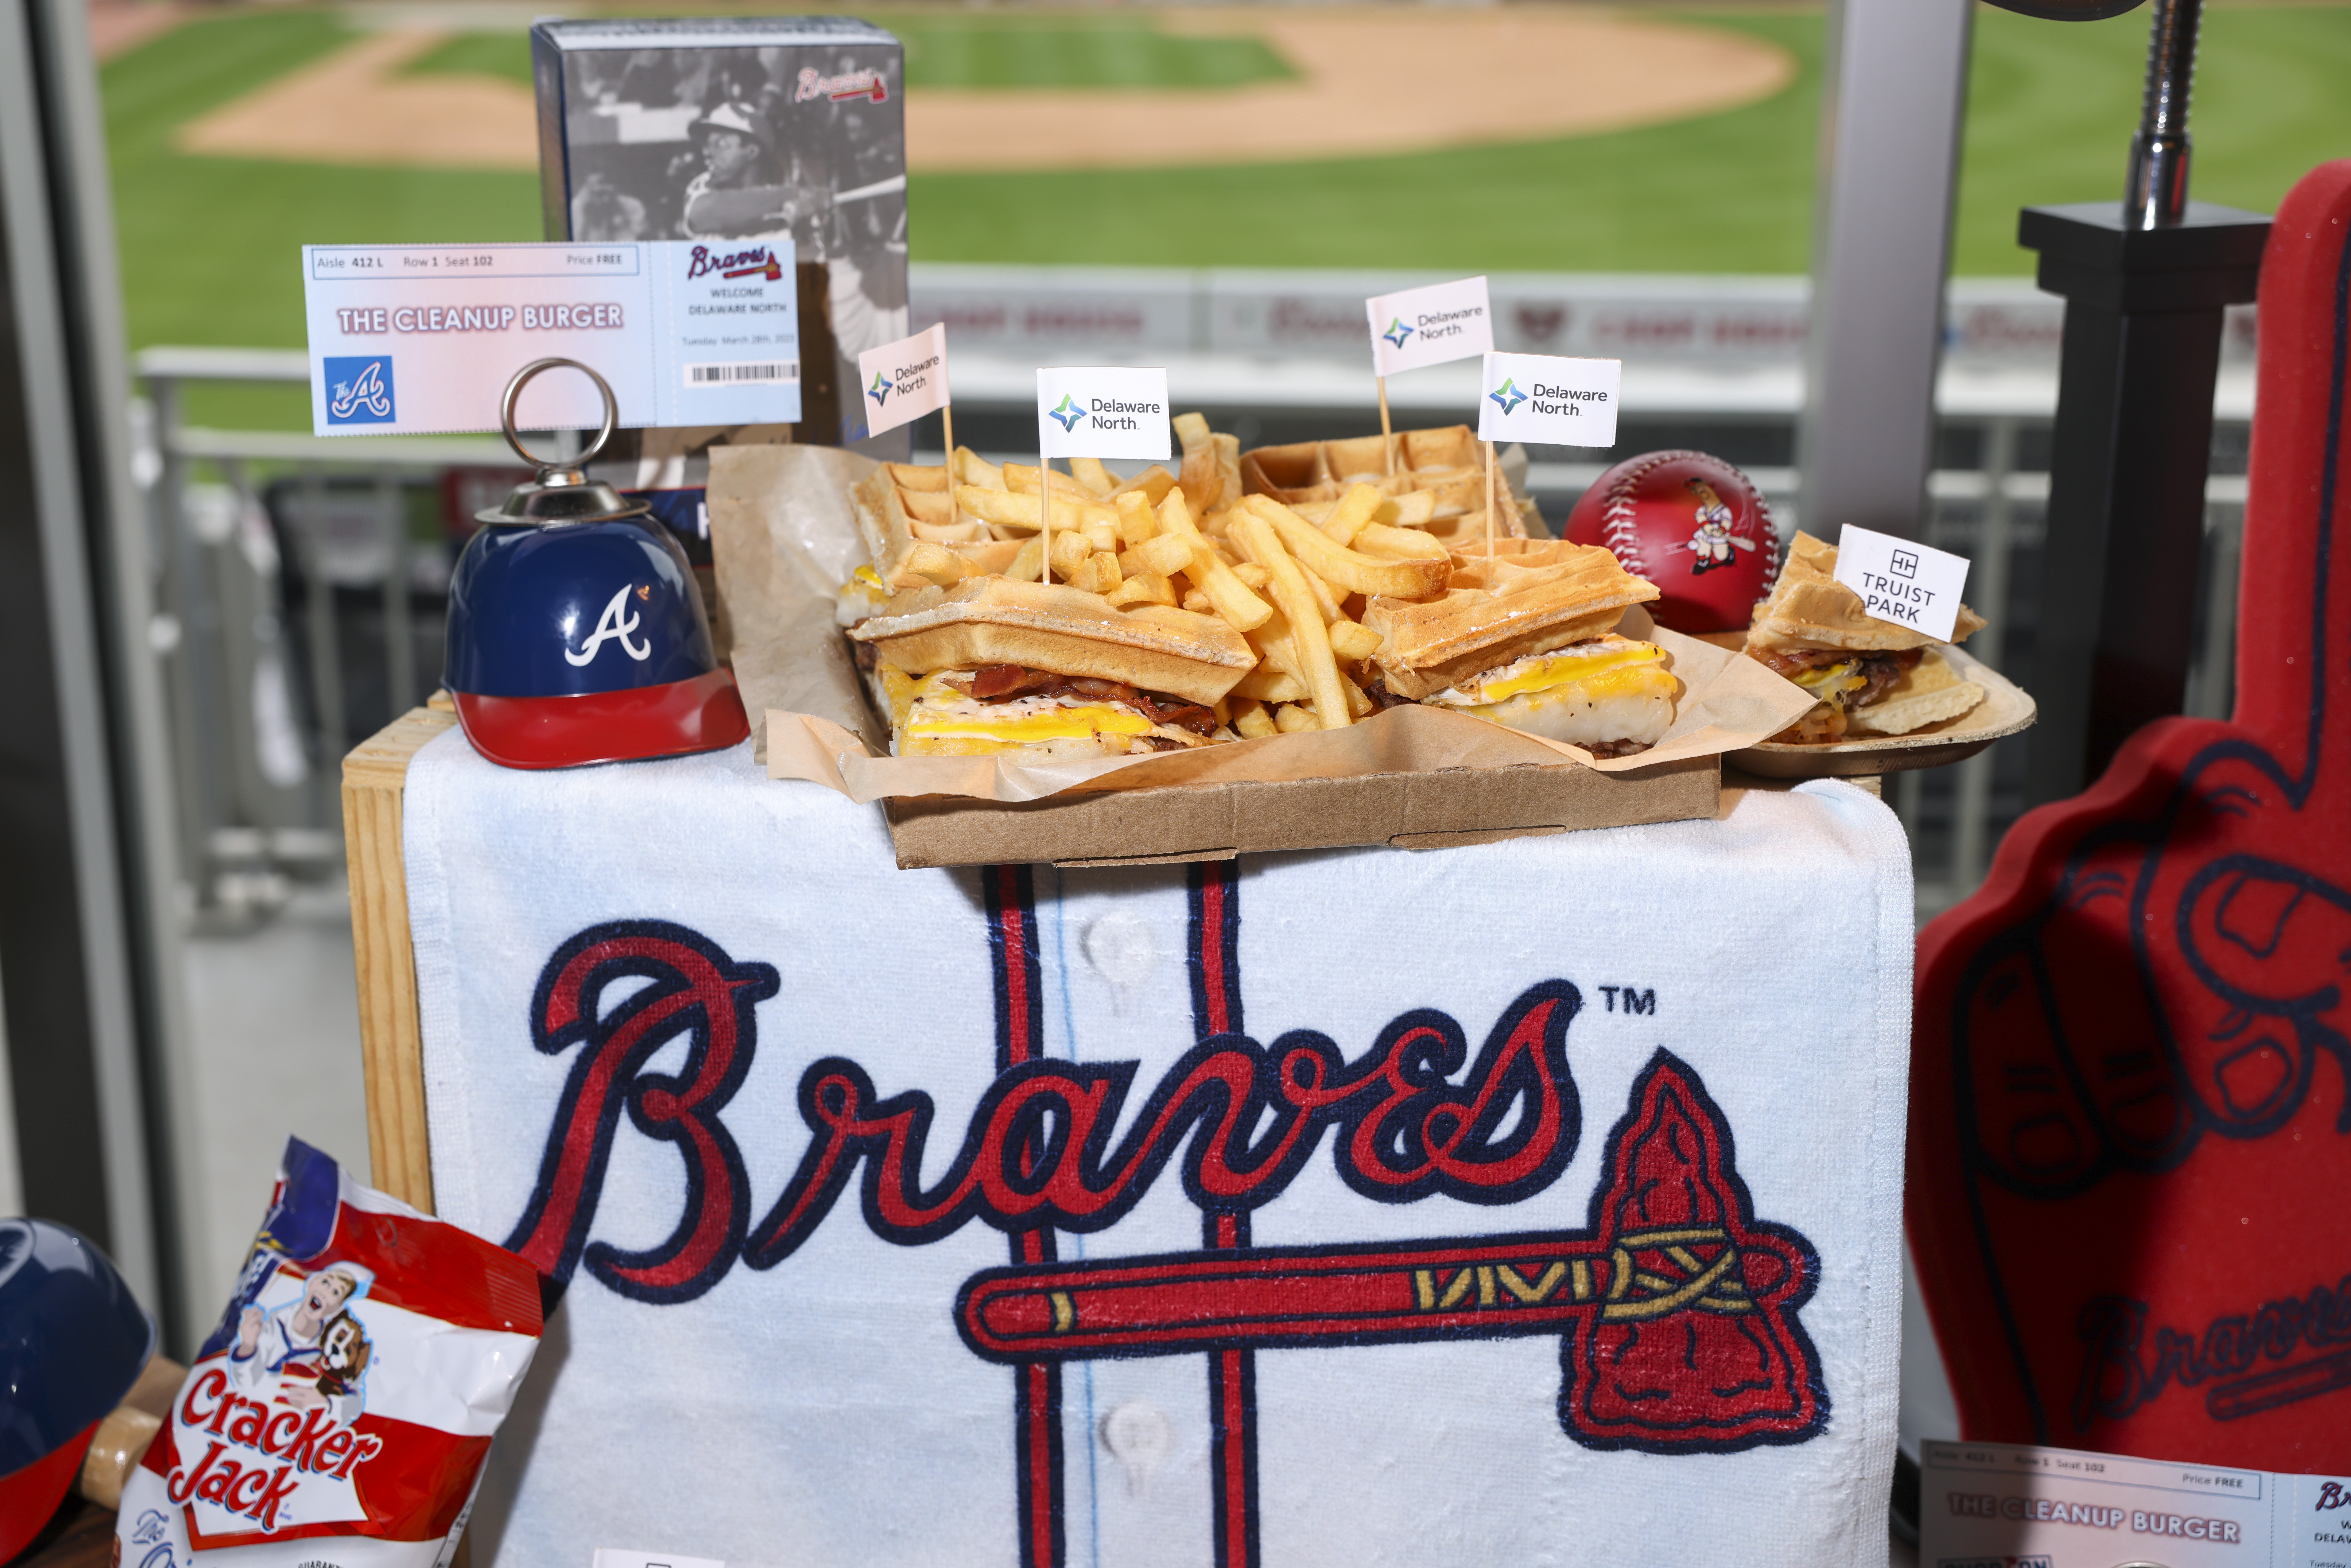 Atlanta Braves stadium food: Truist Park includes a $151 burger